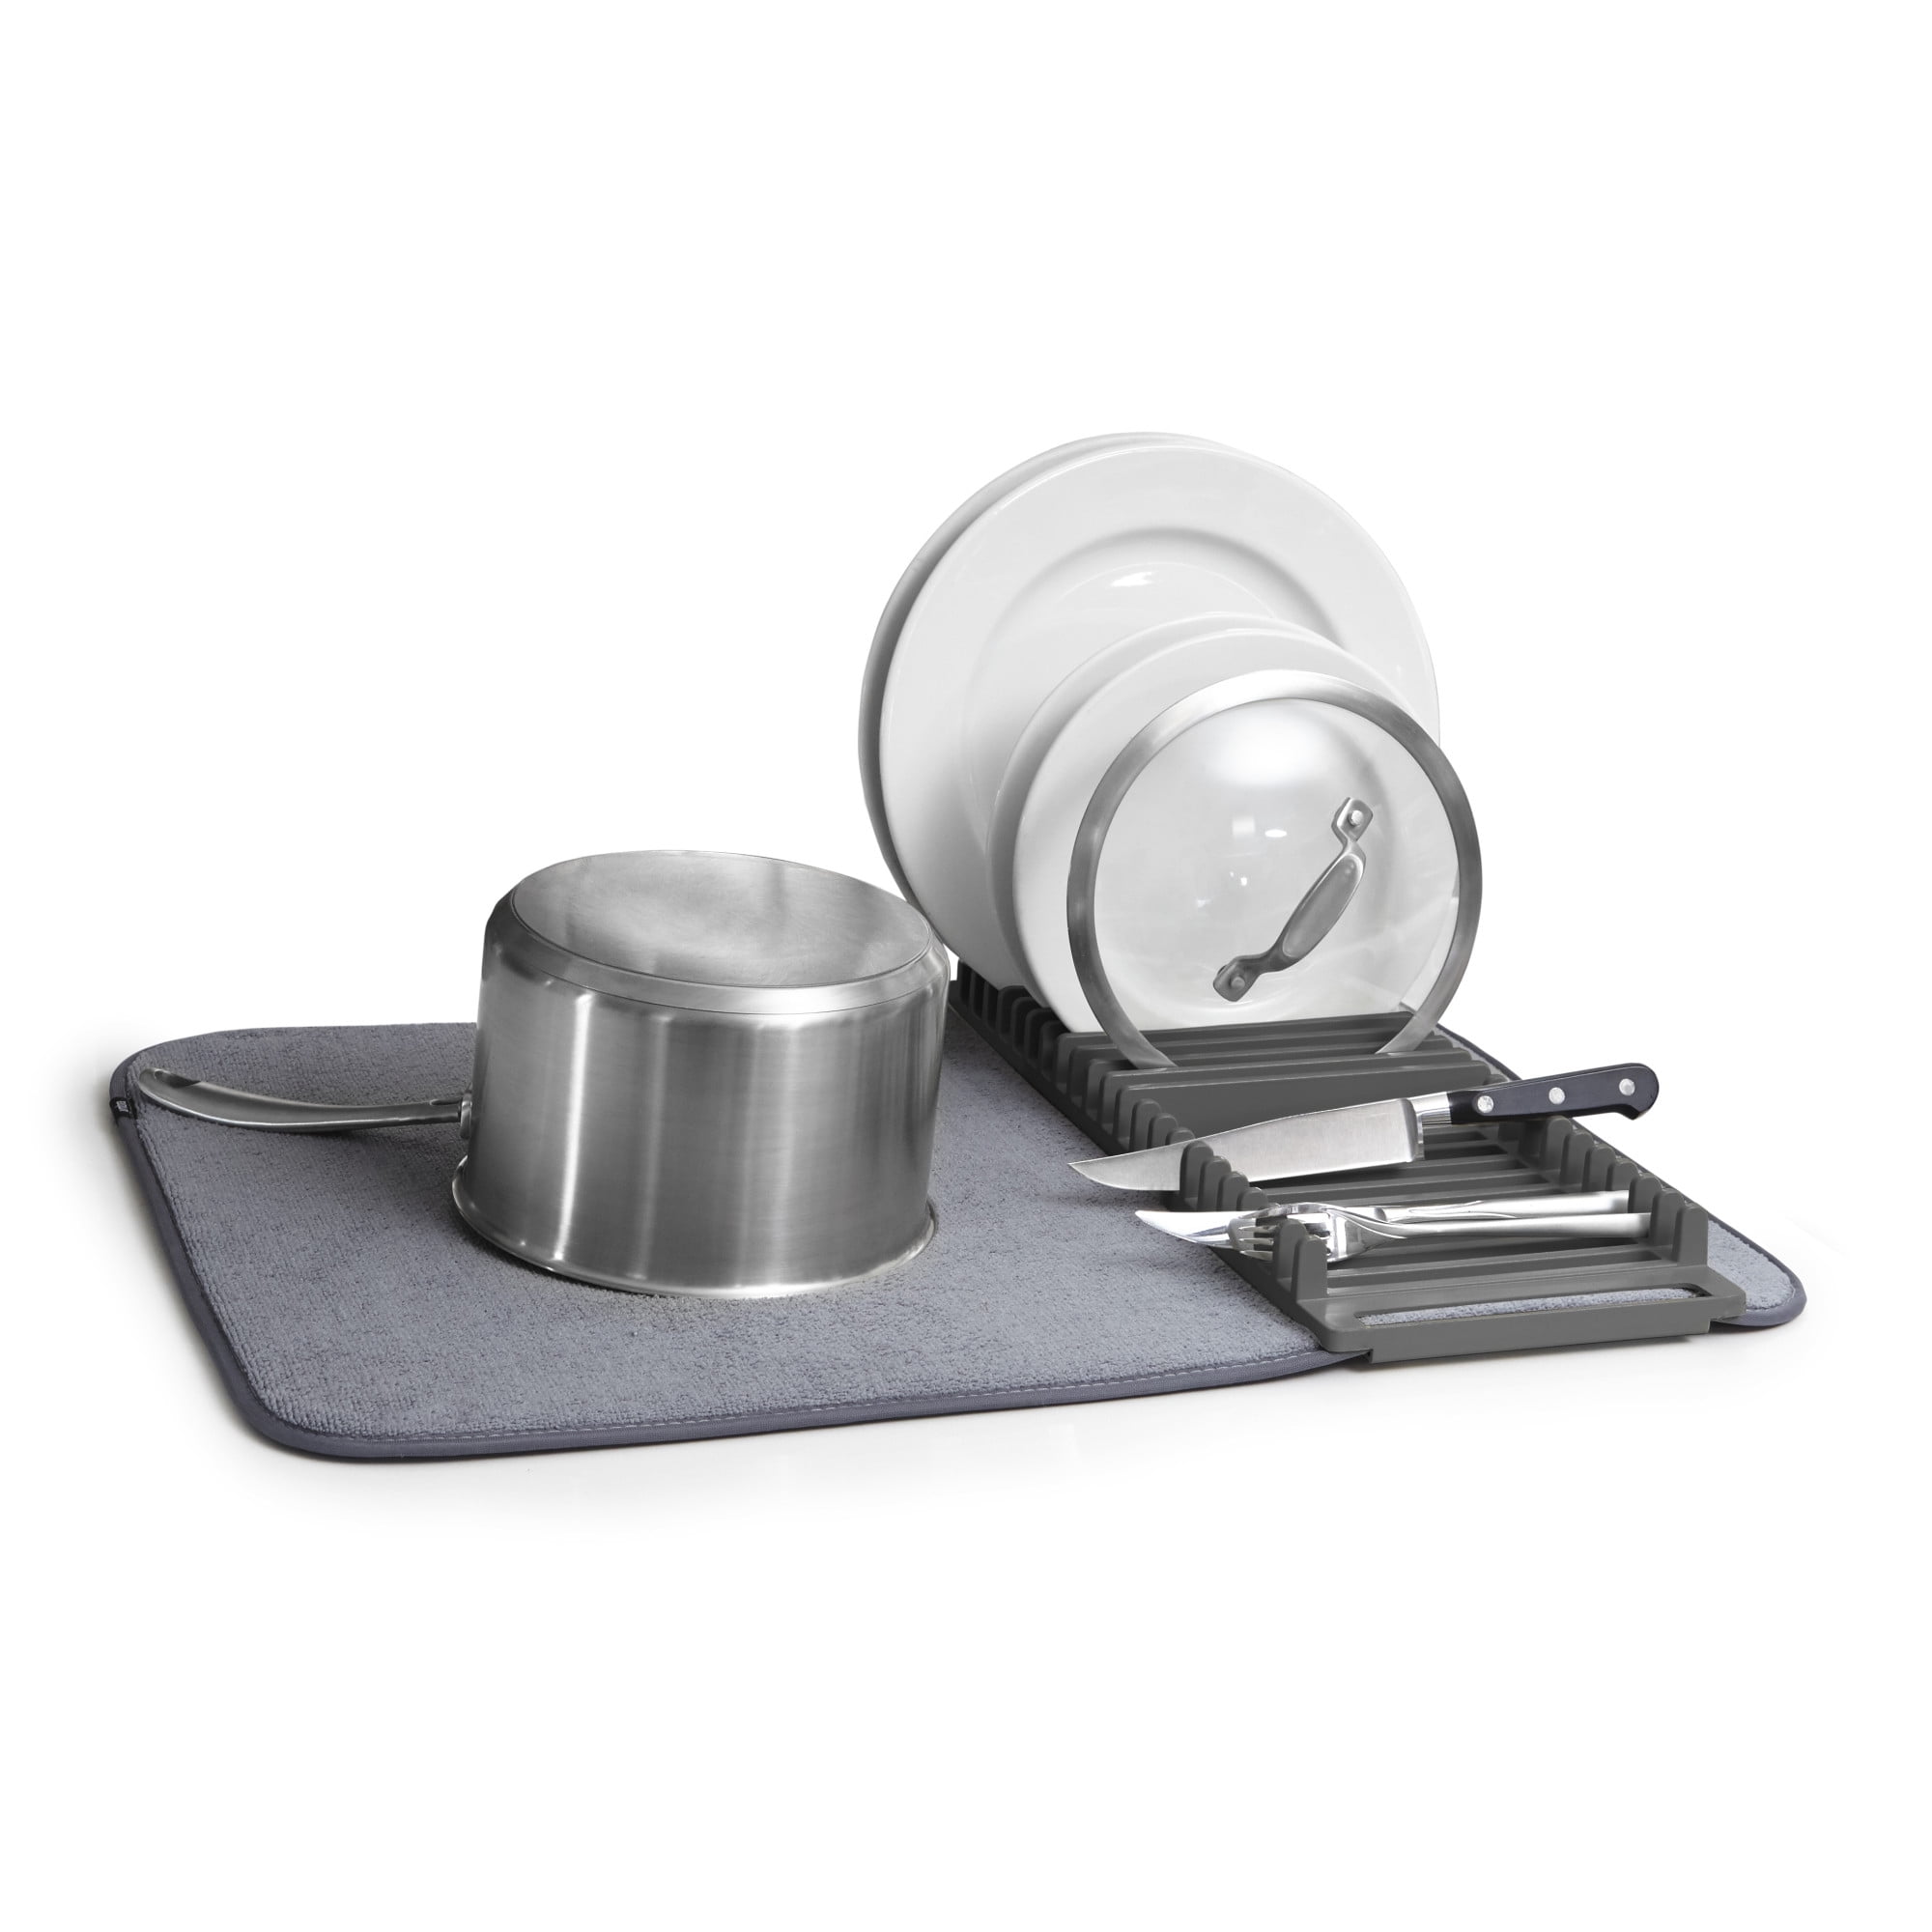 Umbra Gray UDry Folding Microfiber Dish Drying Mat - World Market